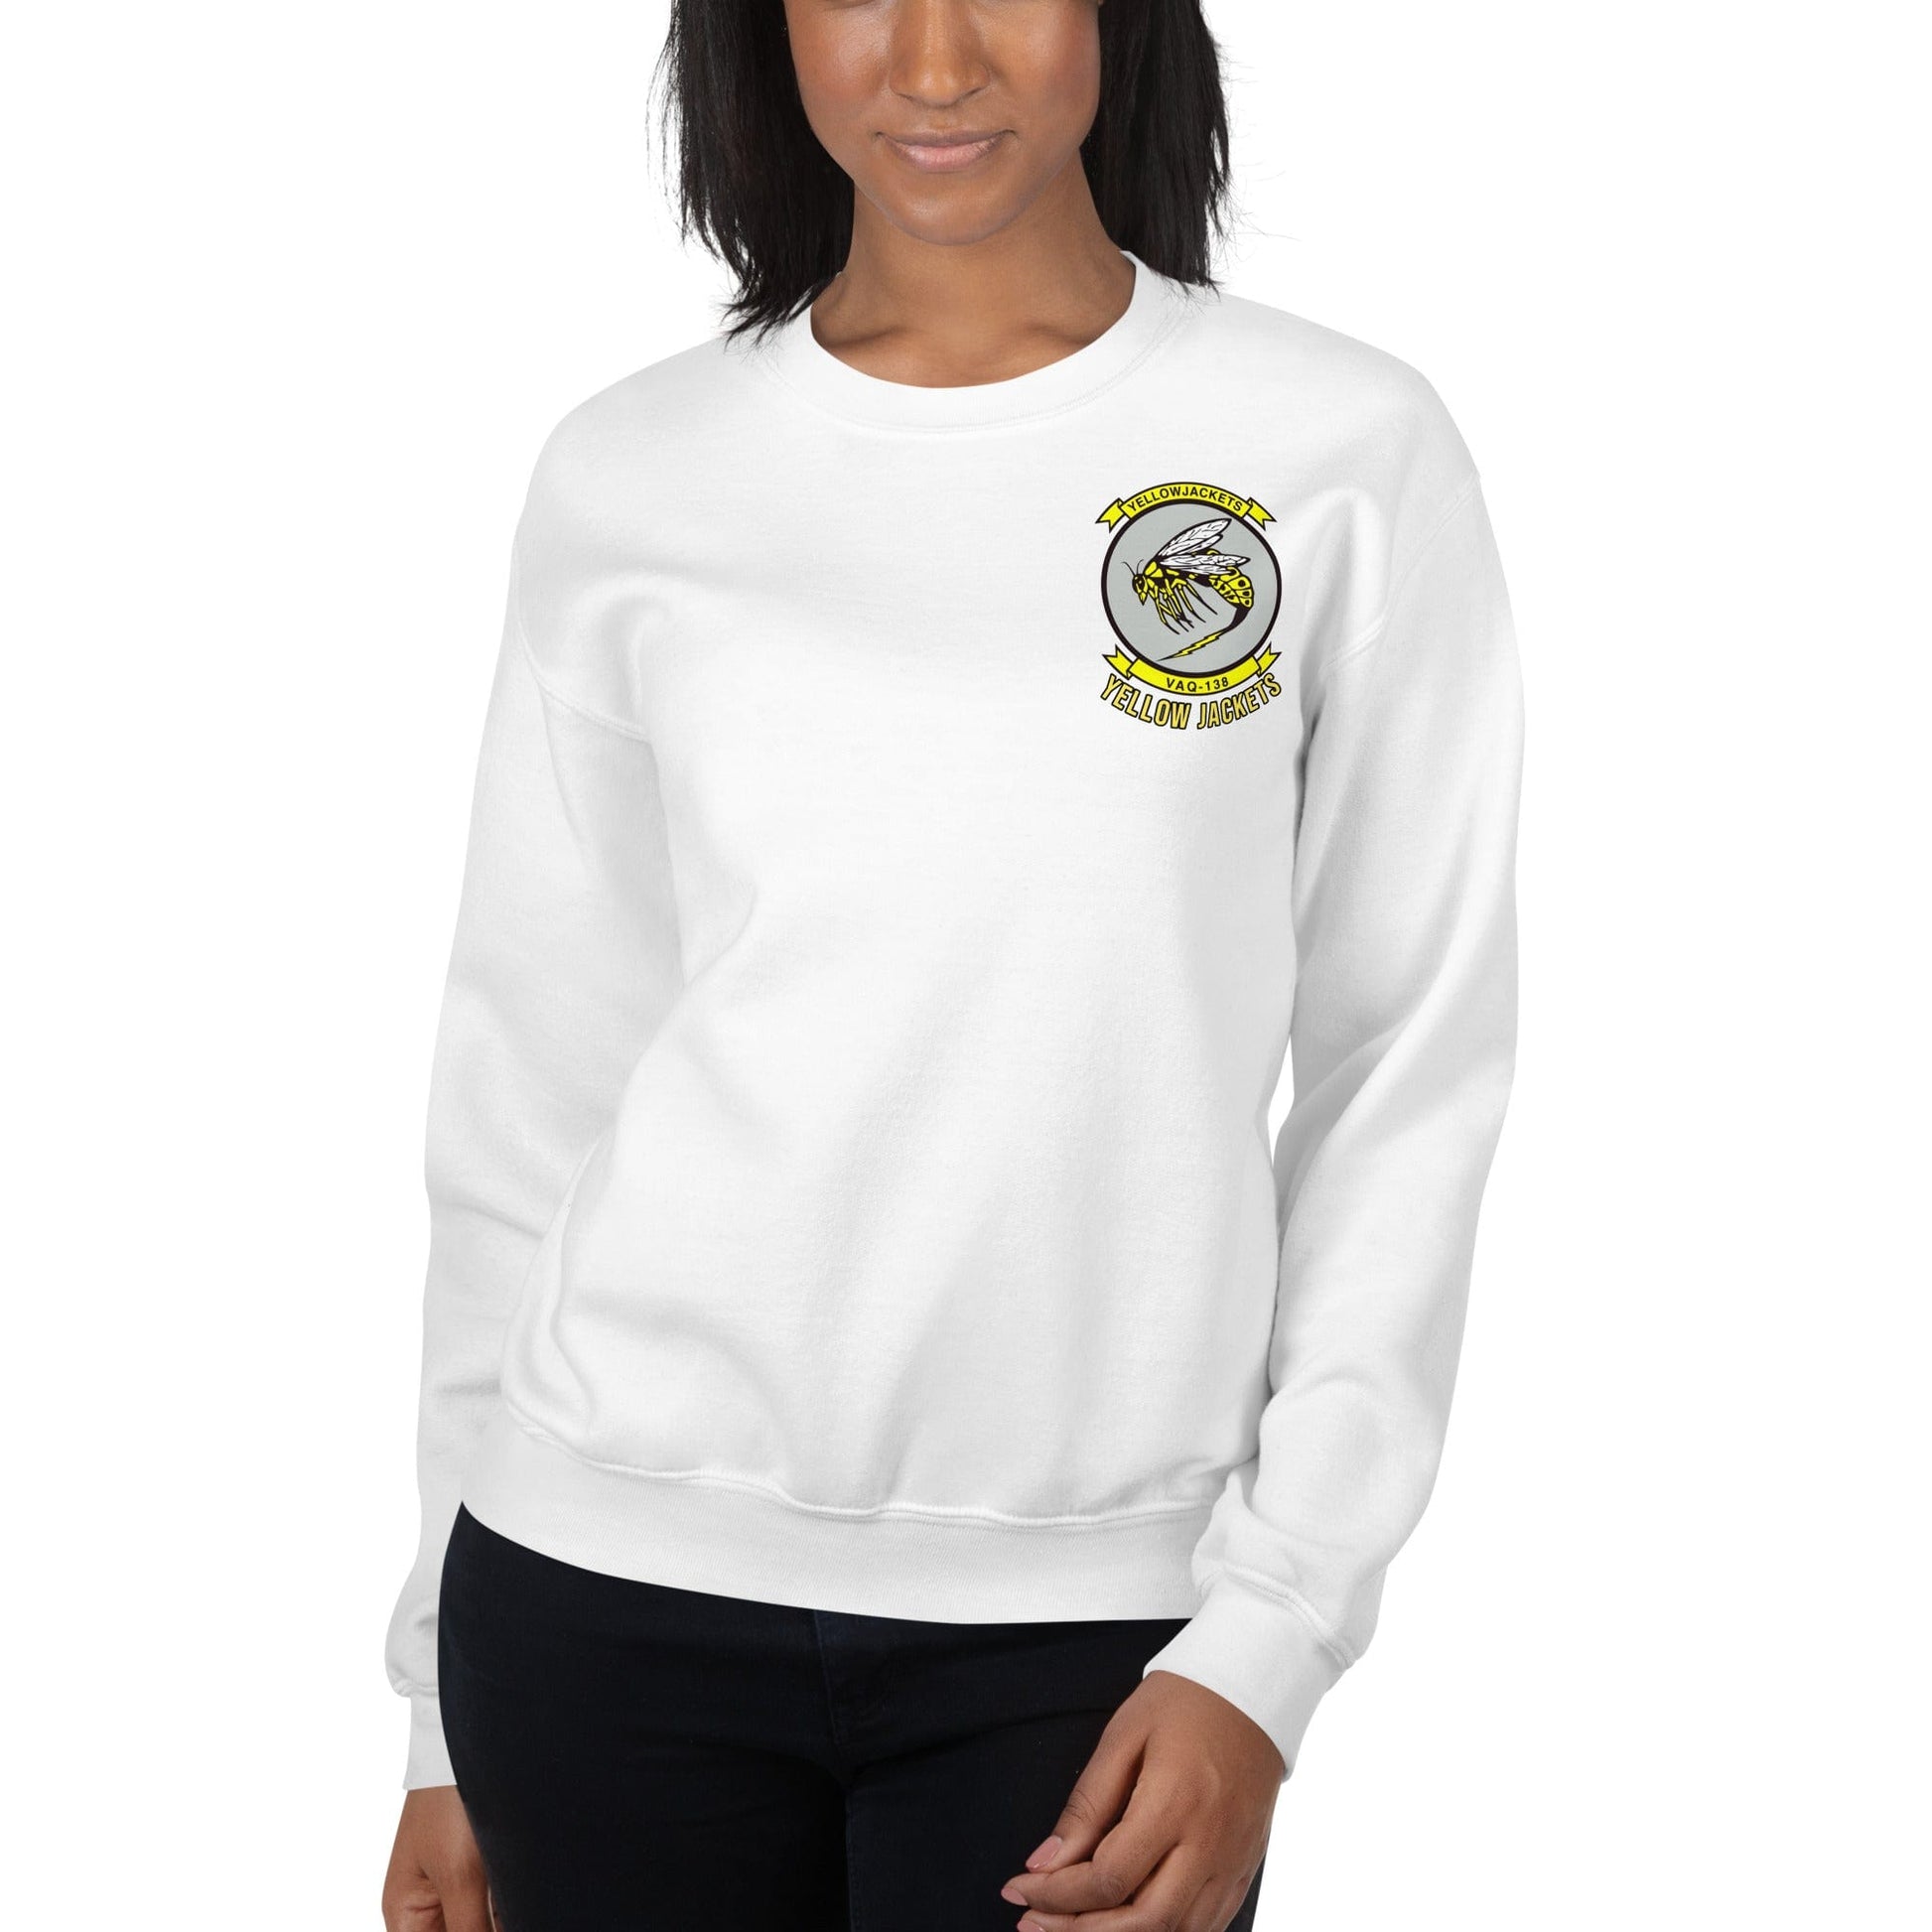 VAQ-138 "Yellow Jackets" Women's Sweatshirt